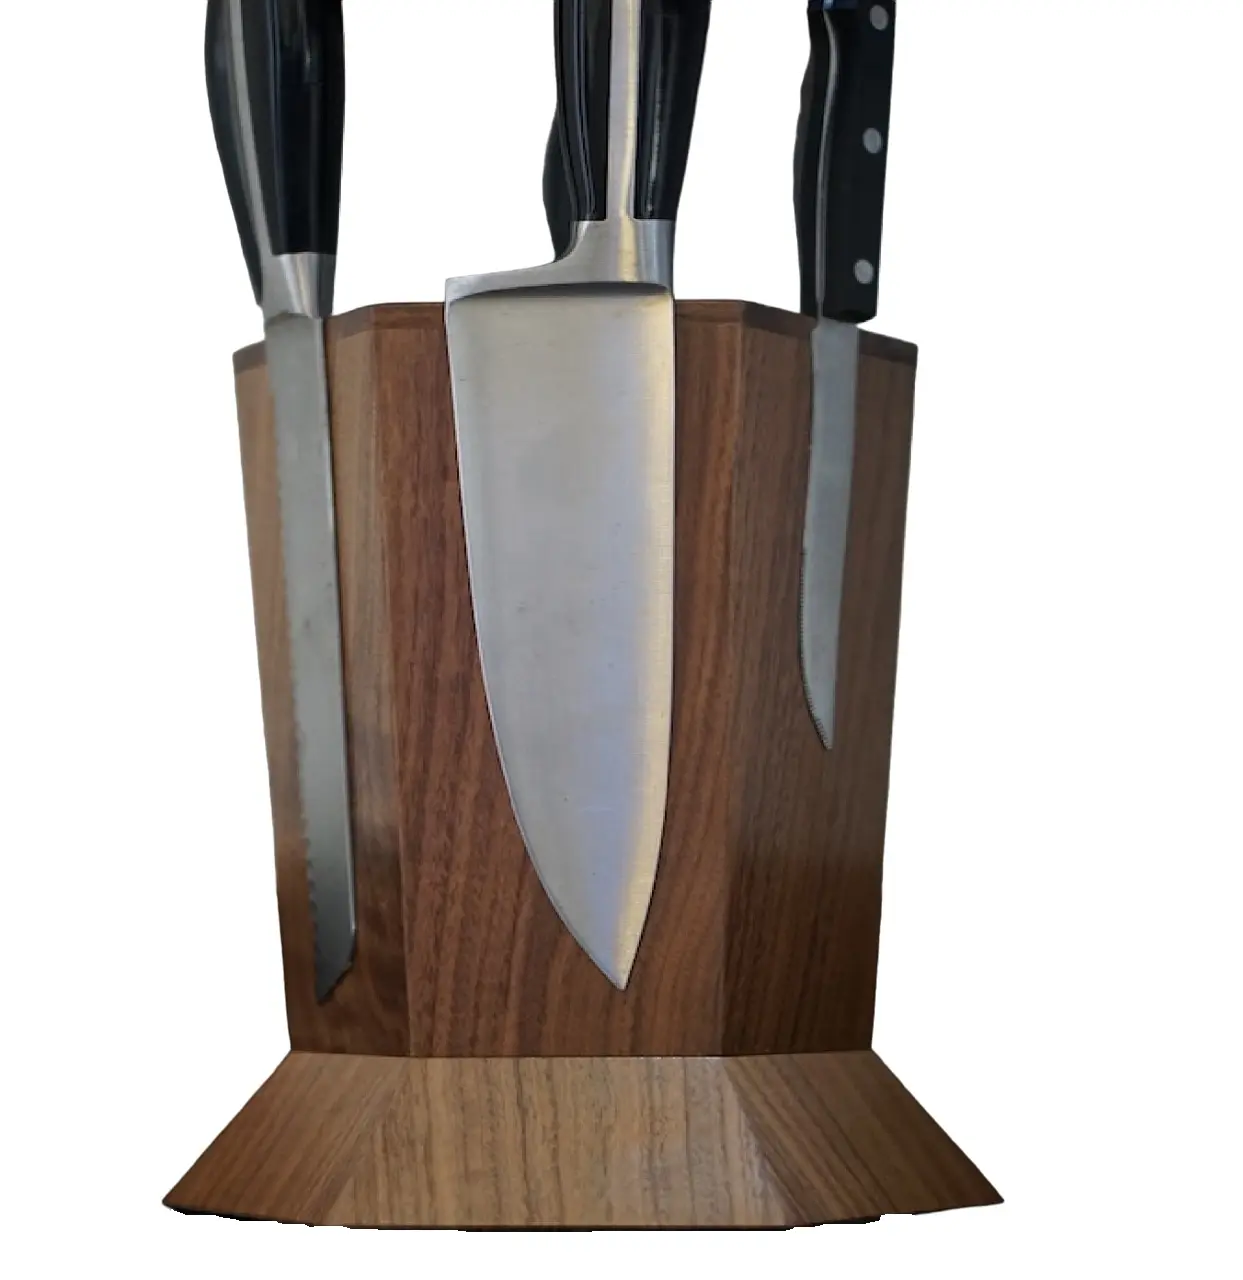 Bamboo Knives Block Holder Best Seller Organizer Block Kitchen Storage Holder On Kitchen Utensils In Reasonable Price